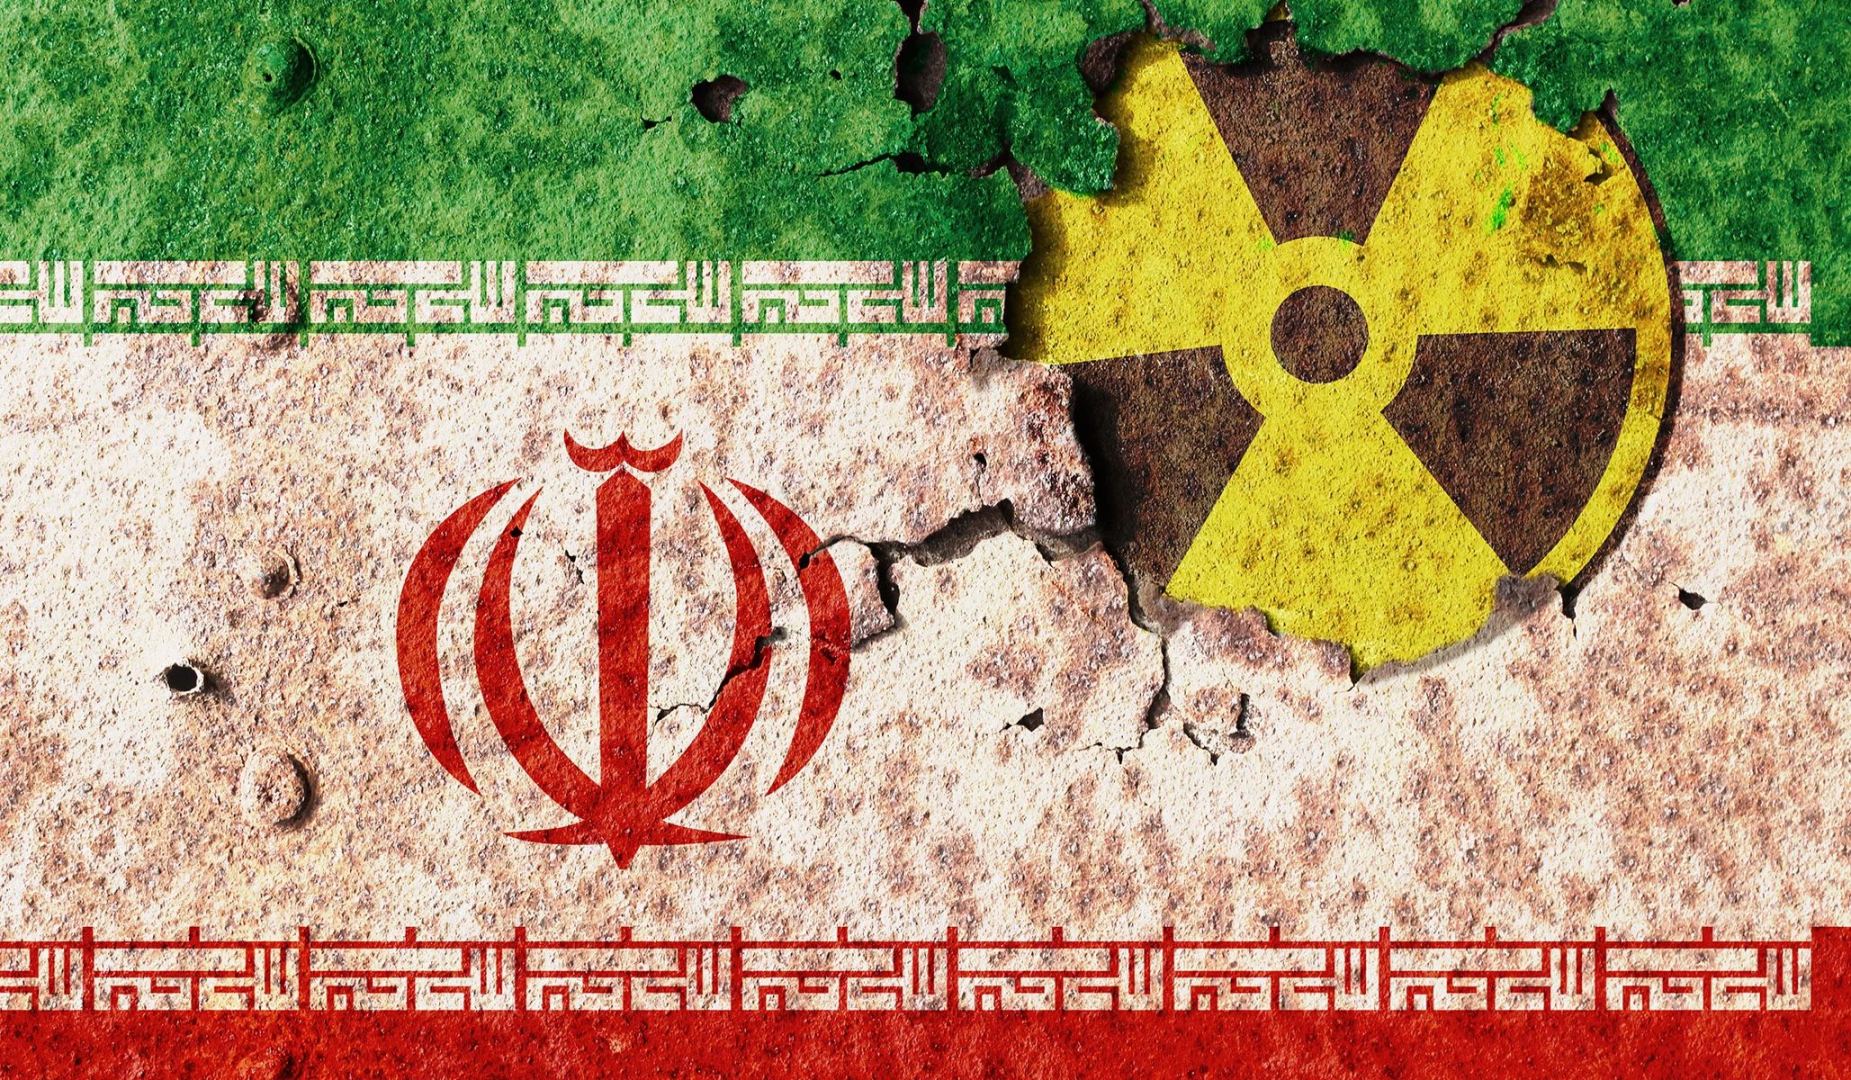 JCPOA fiasco: IAEA control mechanism shrinks, Iran benefits